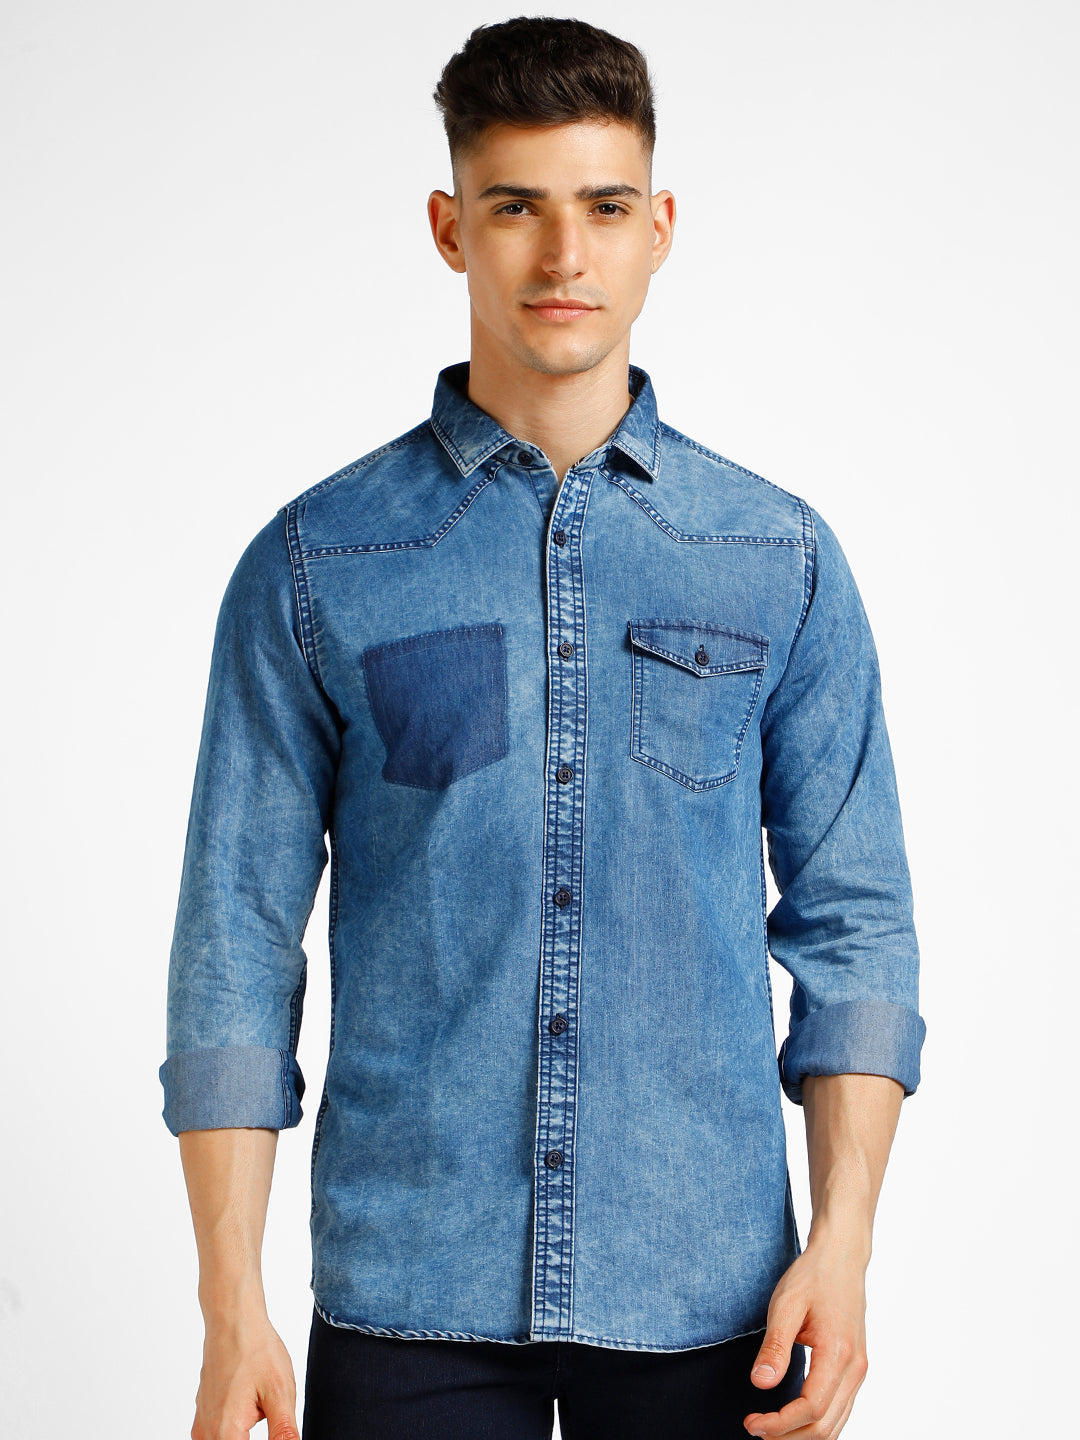 Men's Blue Denim Full Sleeve Slim Fit Washed Casual Shirt